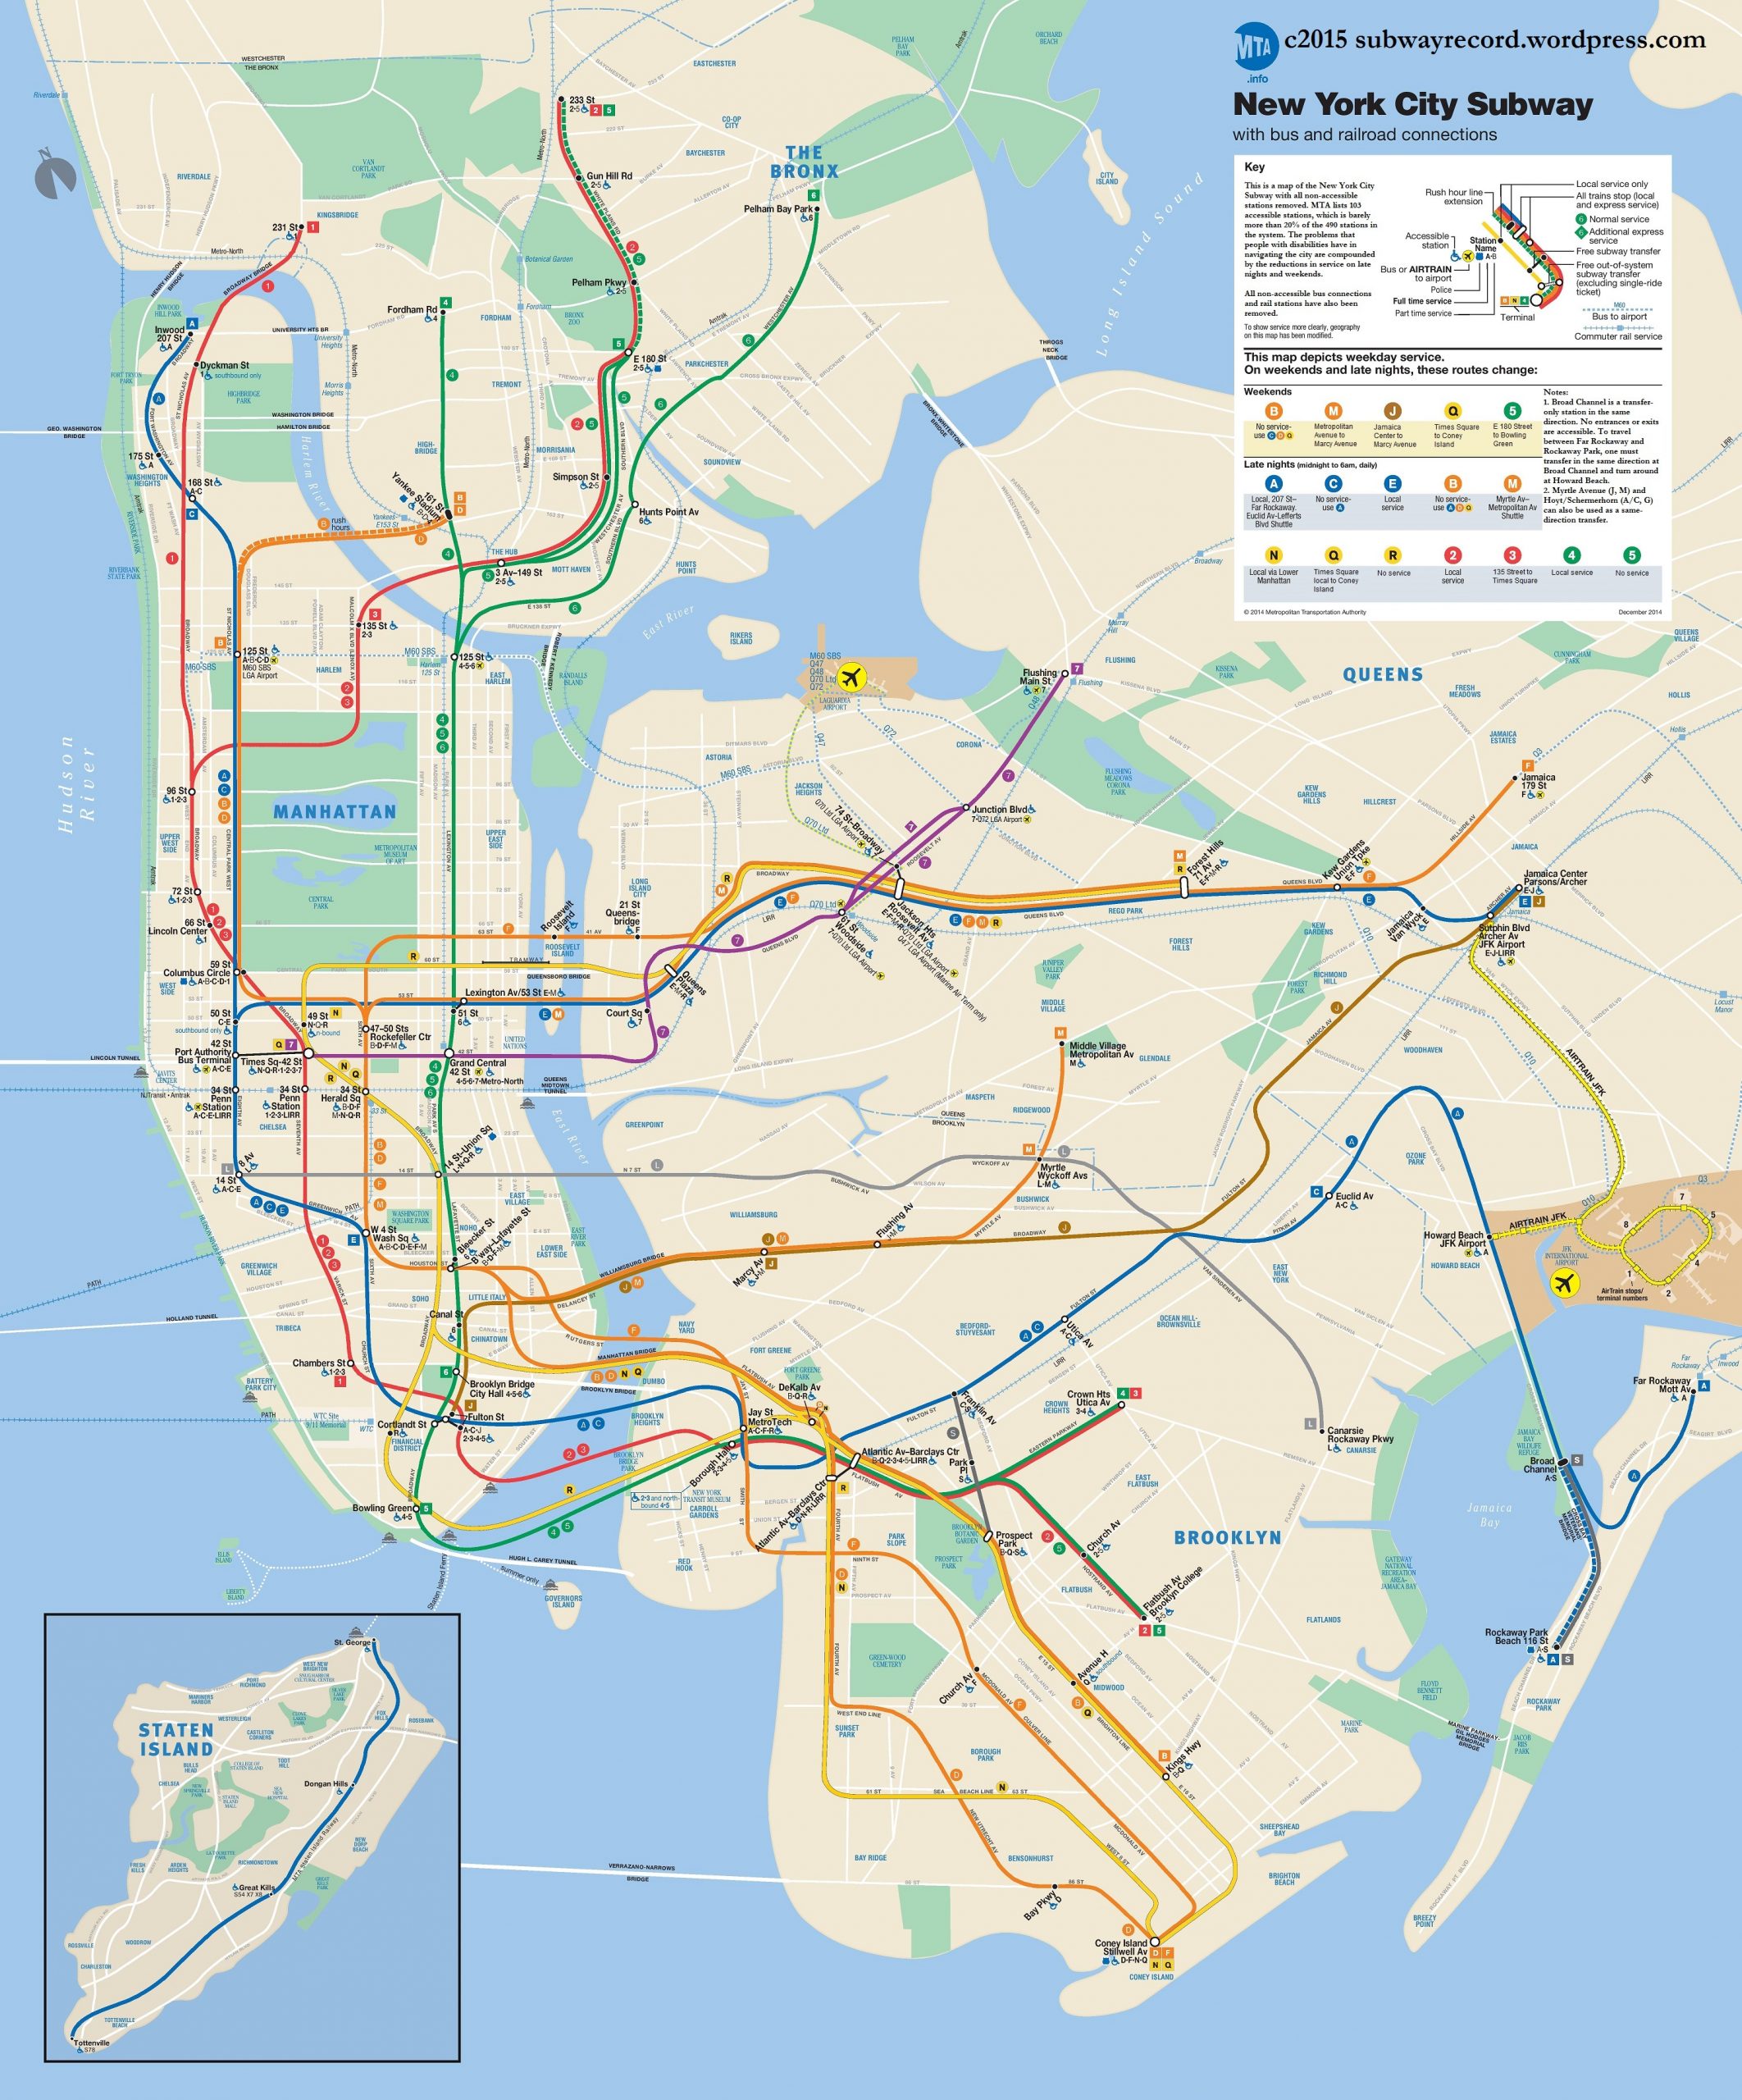 Washington Heights and Inwood subway map